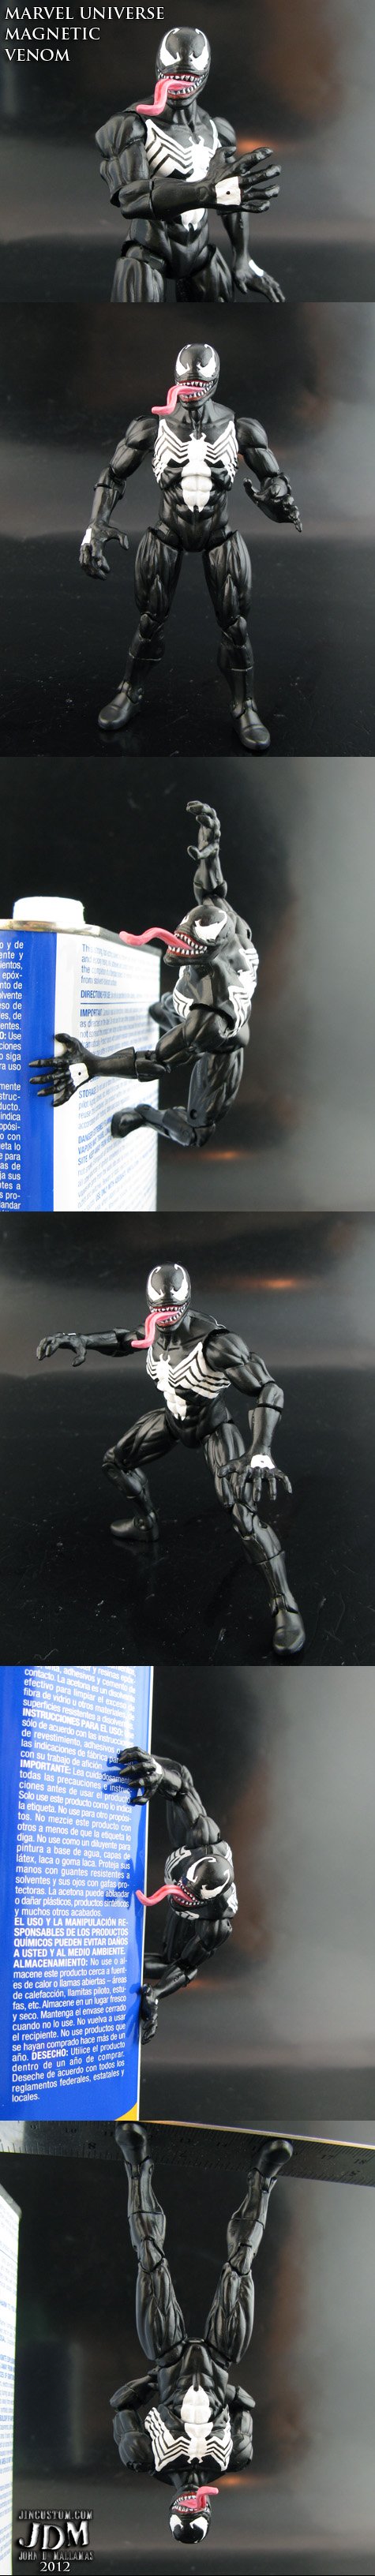 Venom Spiderman Action Figure